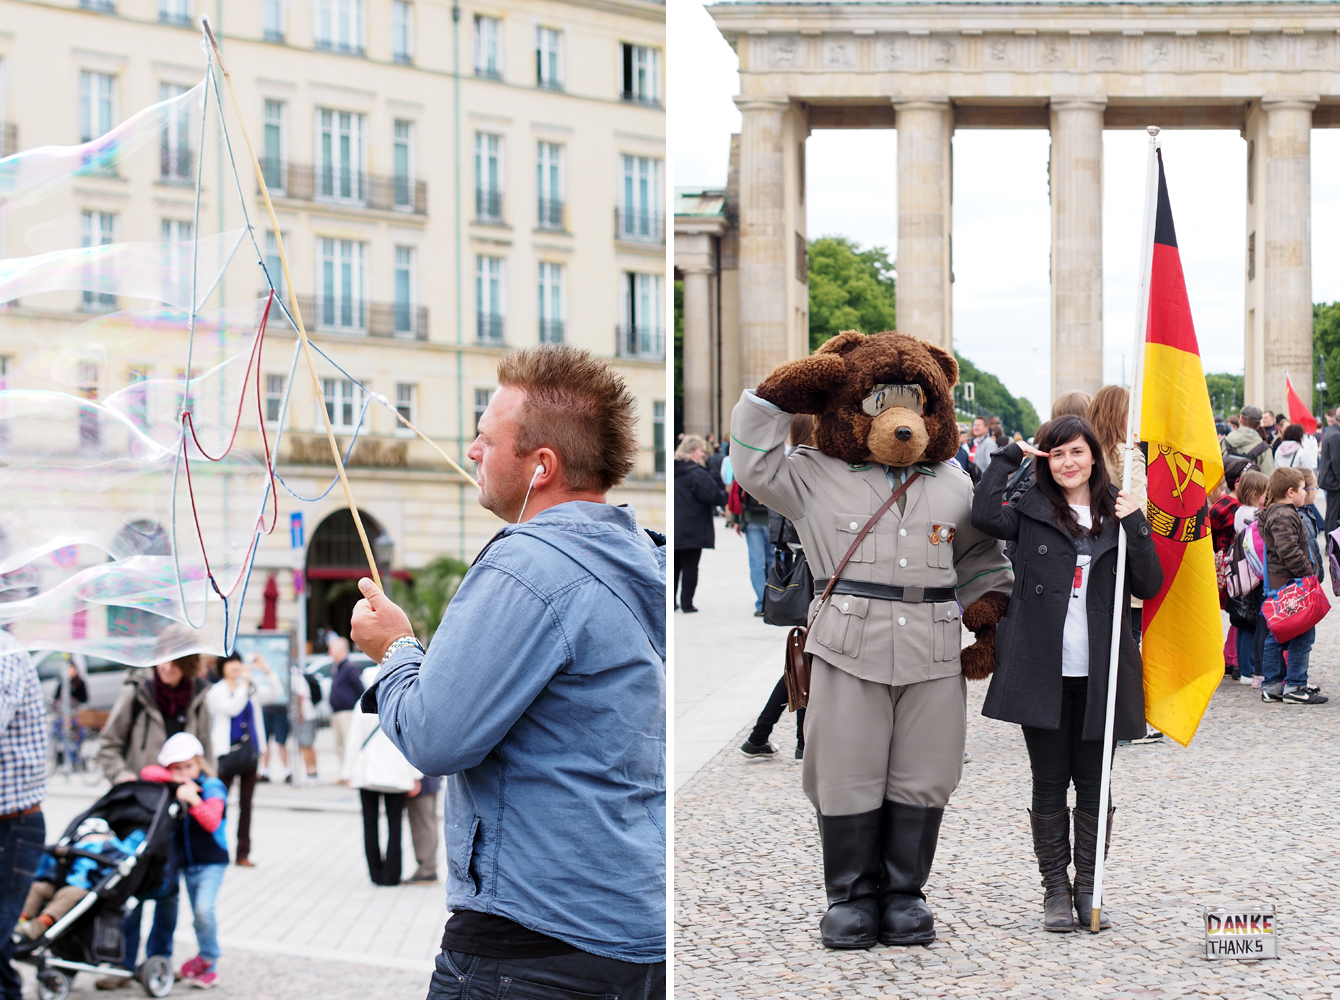 Straßenkünstler vor dem Brandenburger Tor - "Fee ist mein Name"